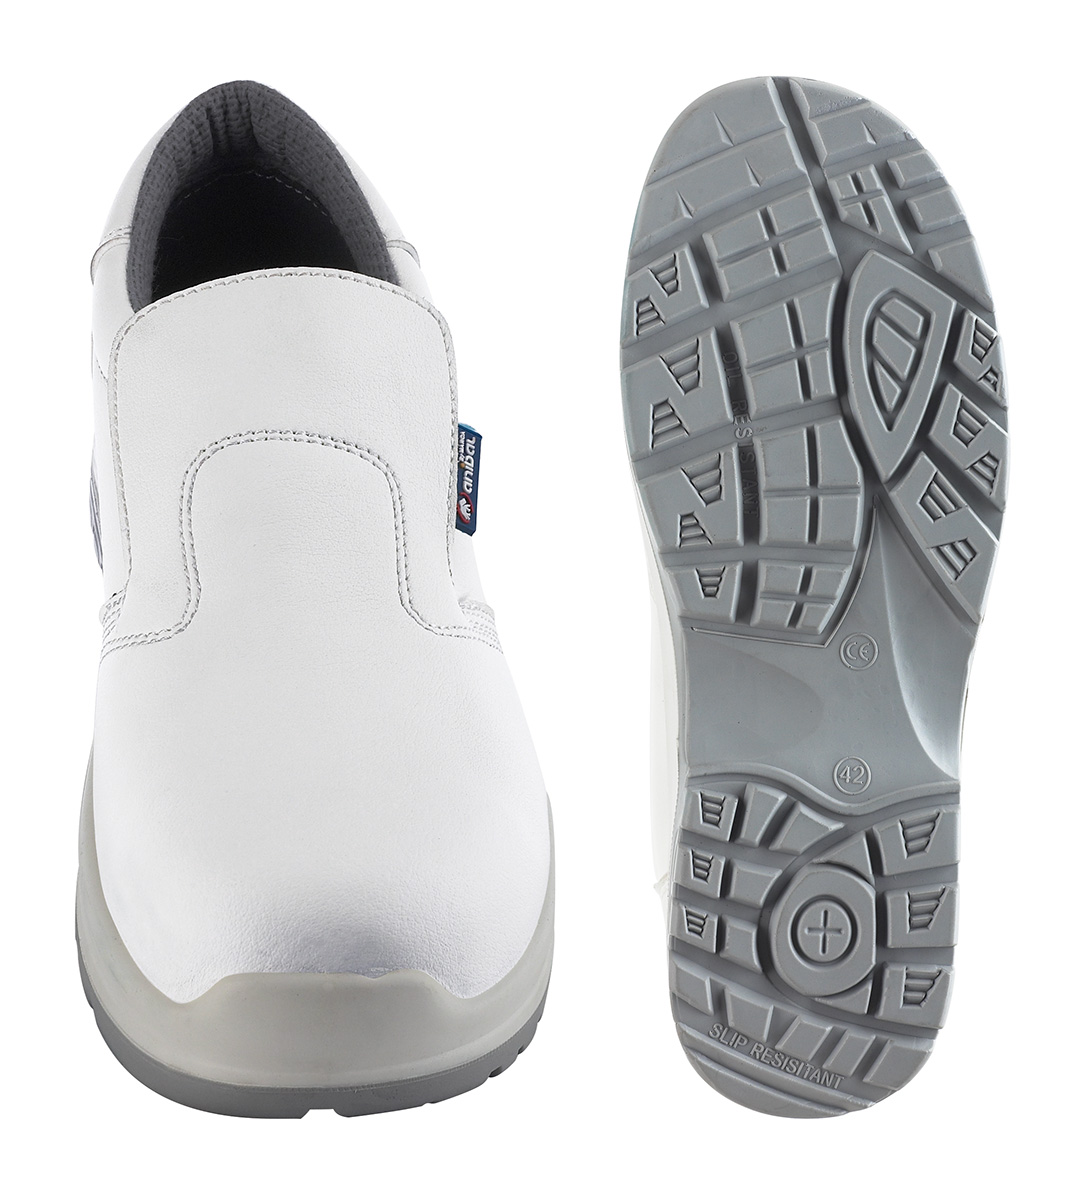 1688-ZBM PRO Safety Footwear Basic Line Shoe mod. 'ADRIATICO'. S2 microfiber moccasin style shoe 'Metal Free' white with dual density polyurethane sole.